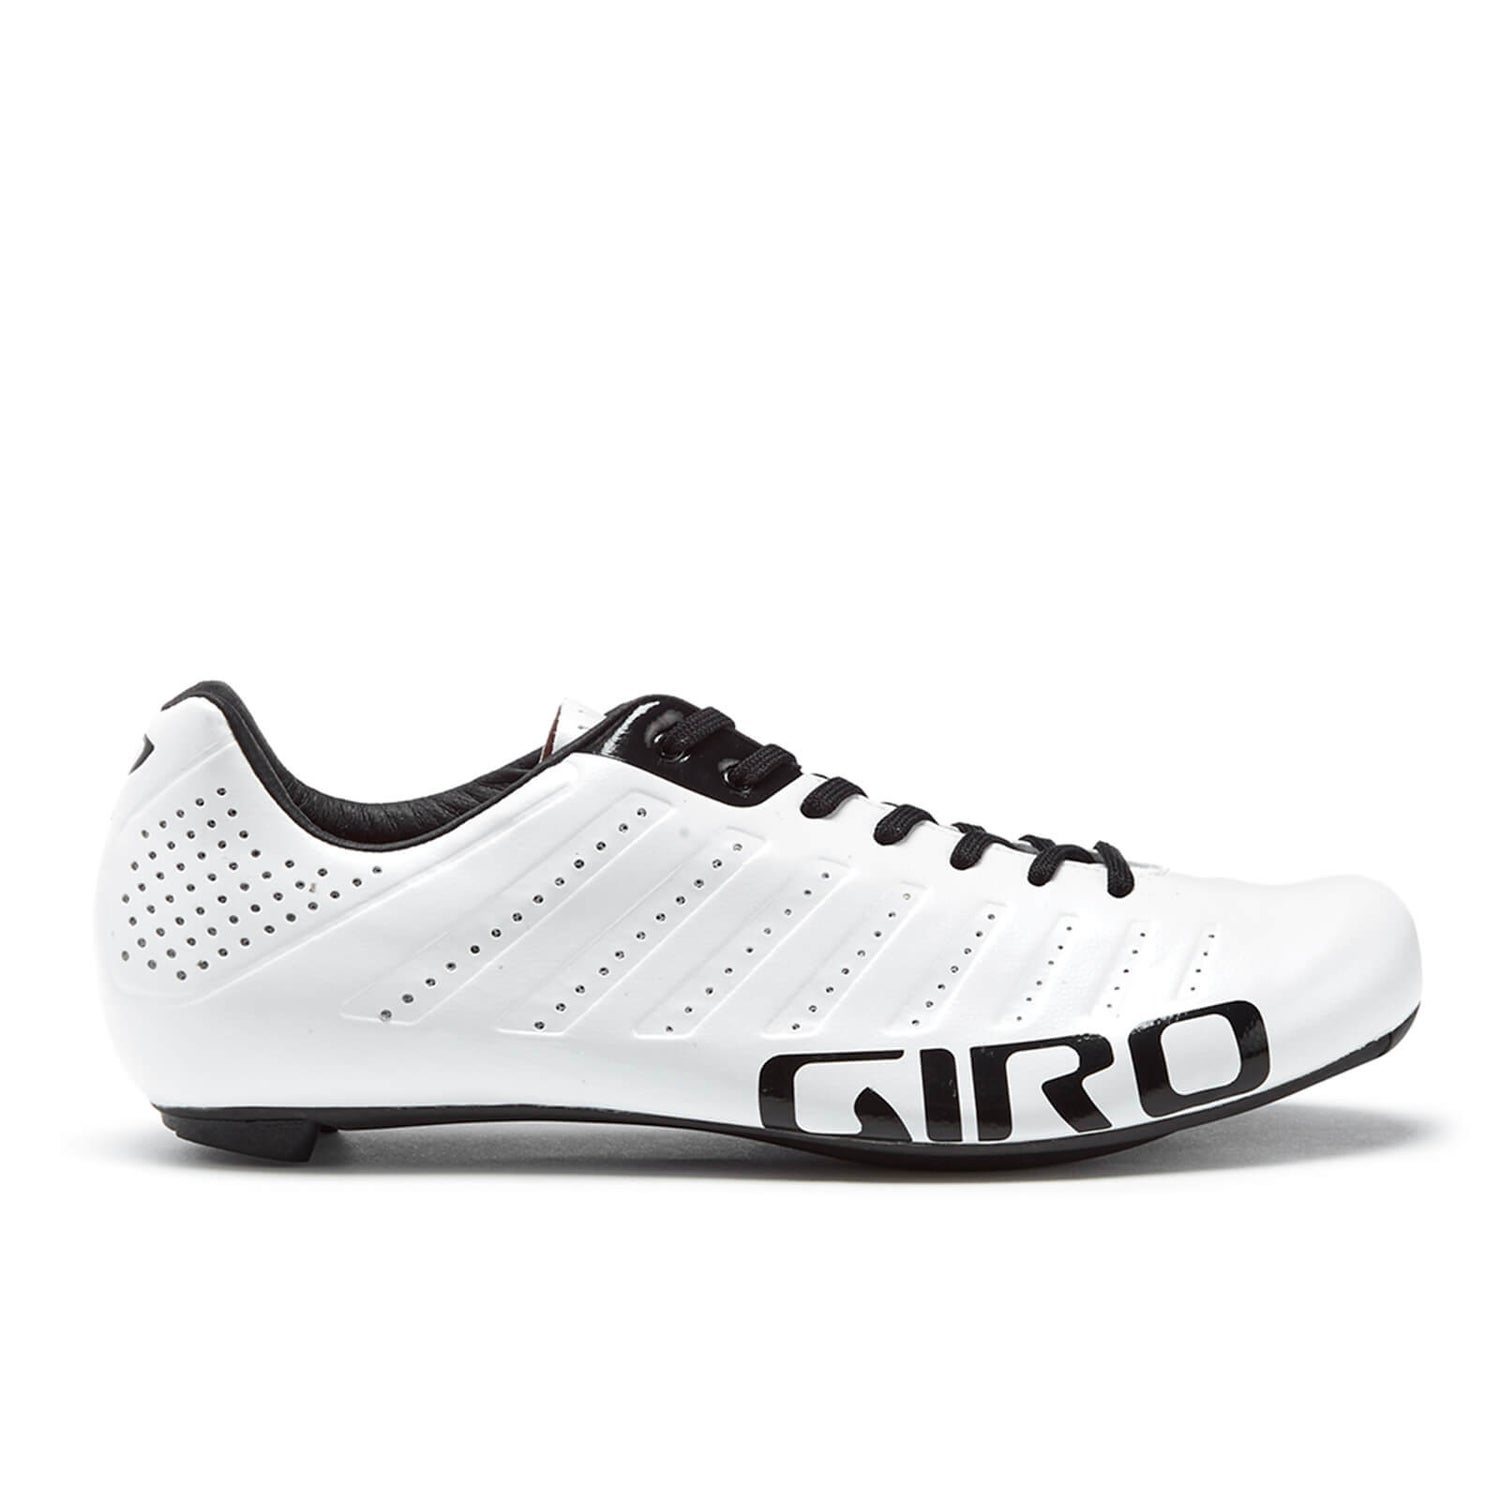 Giro Empire SLX Road Cycling Shoes - White/Black | ProBikeKit.com